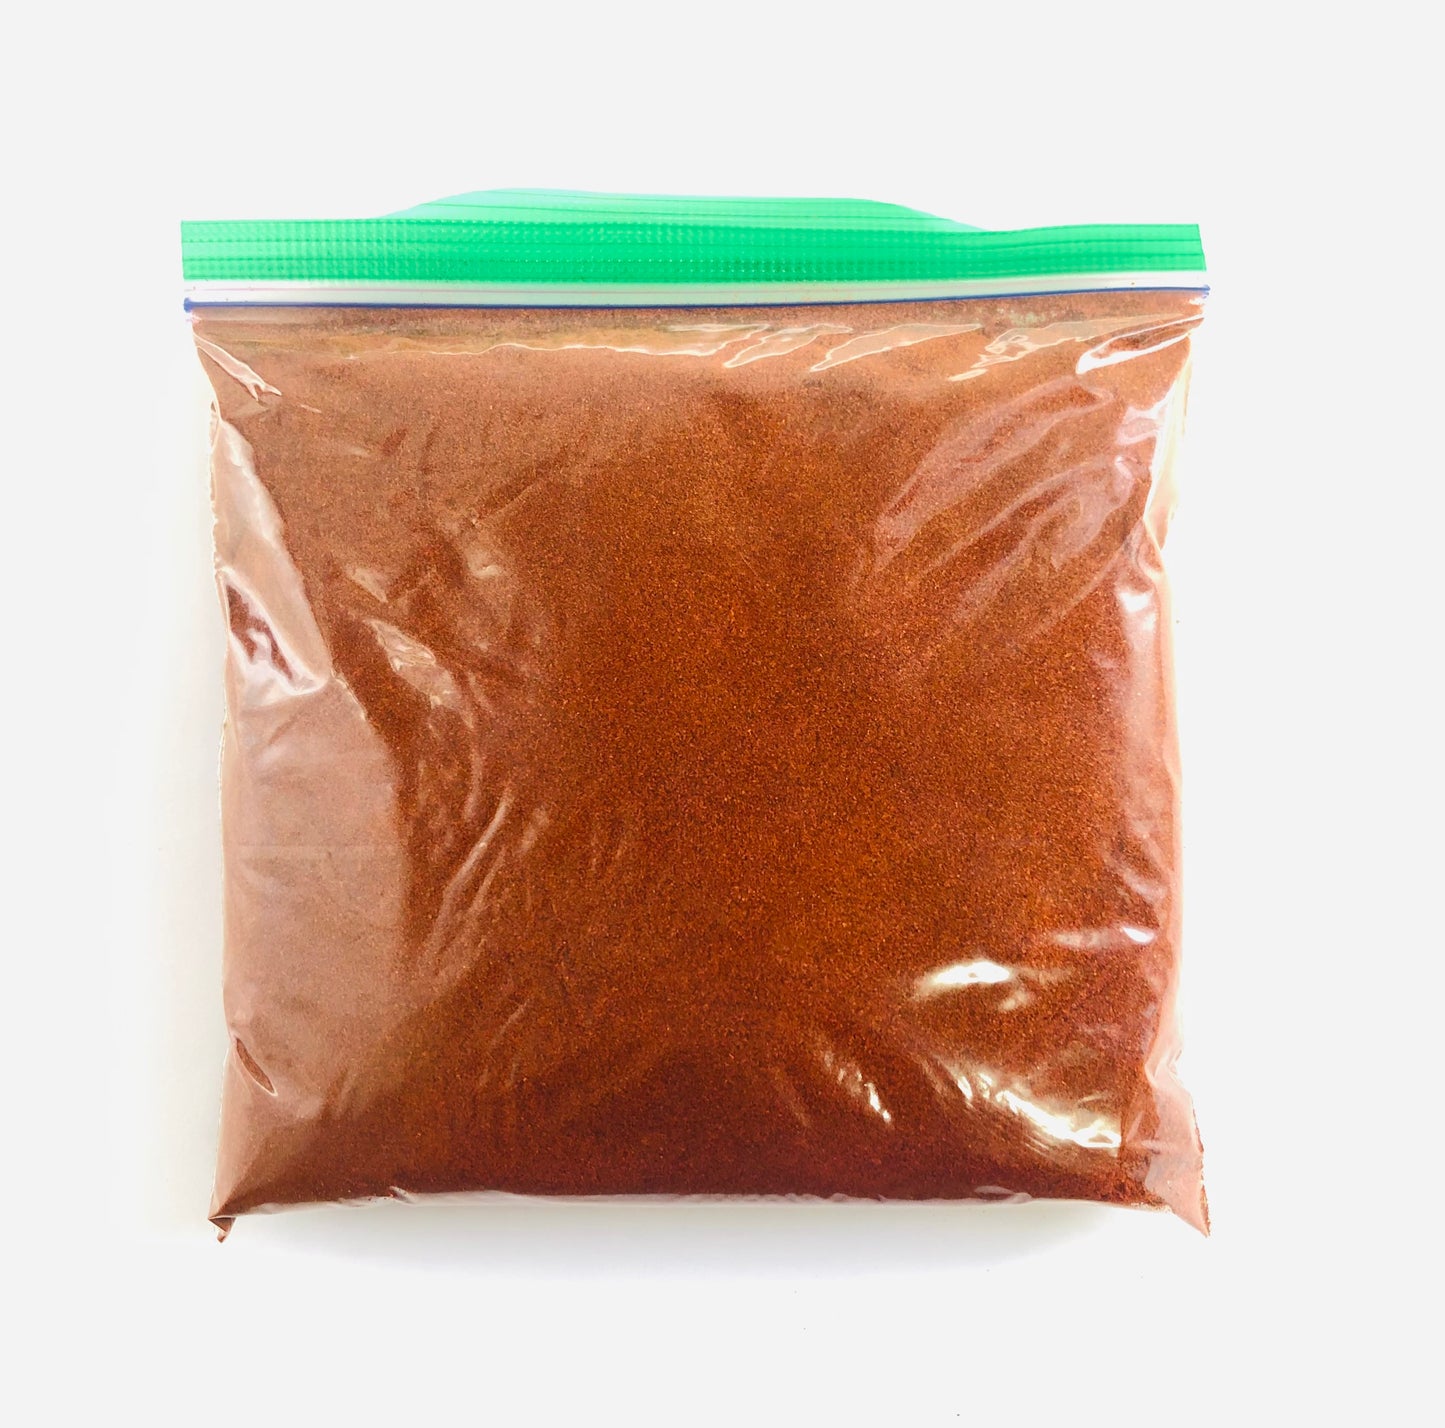 Chimayo Chile Powder (molido) Red-Mild